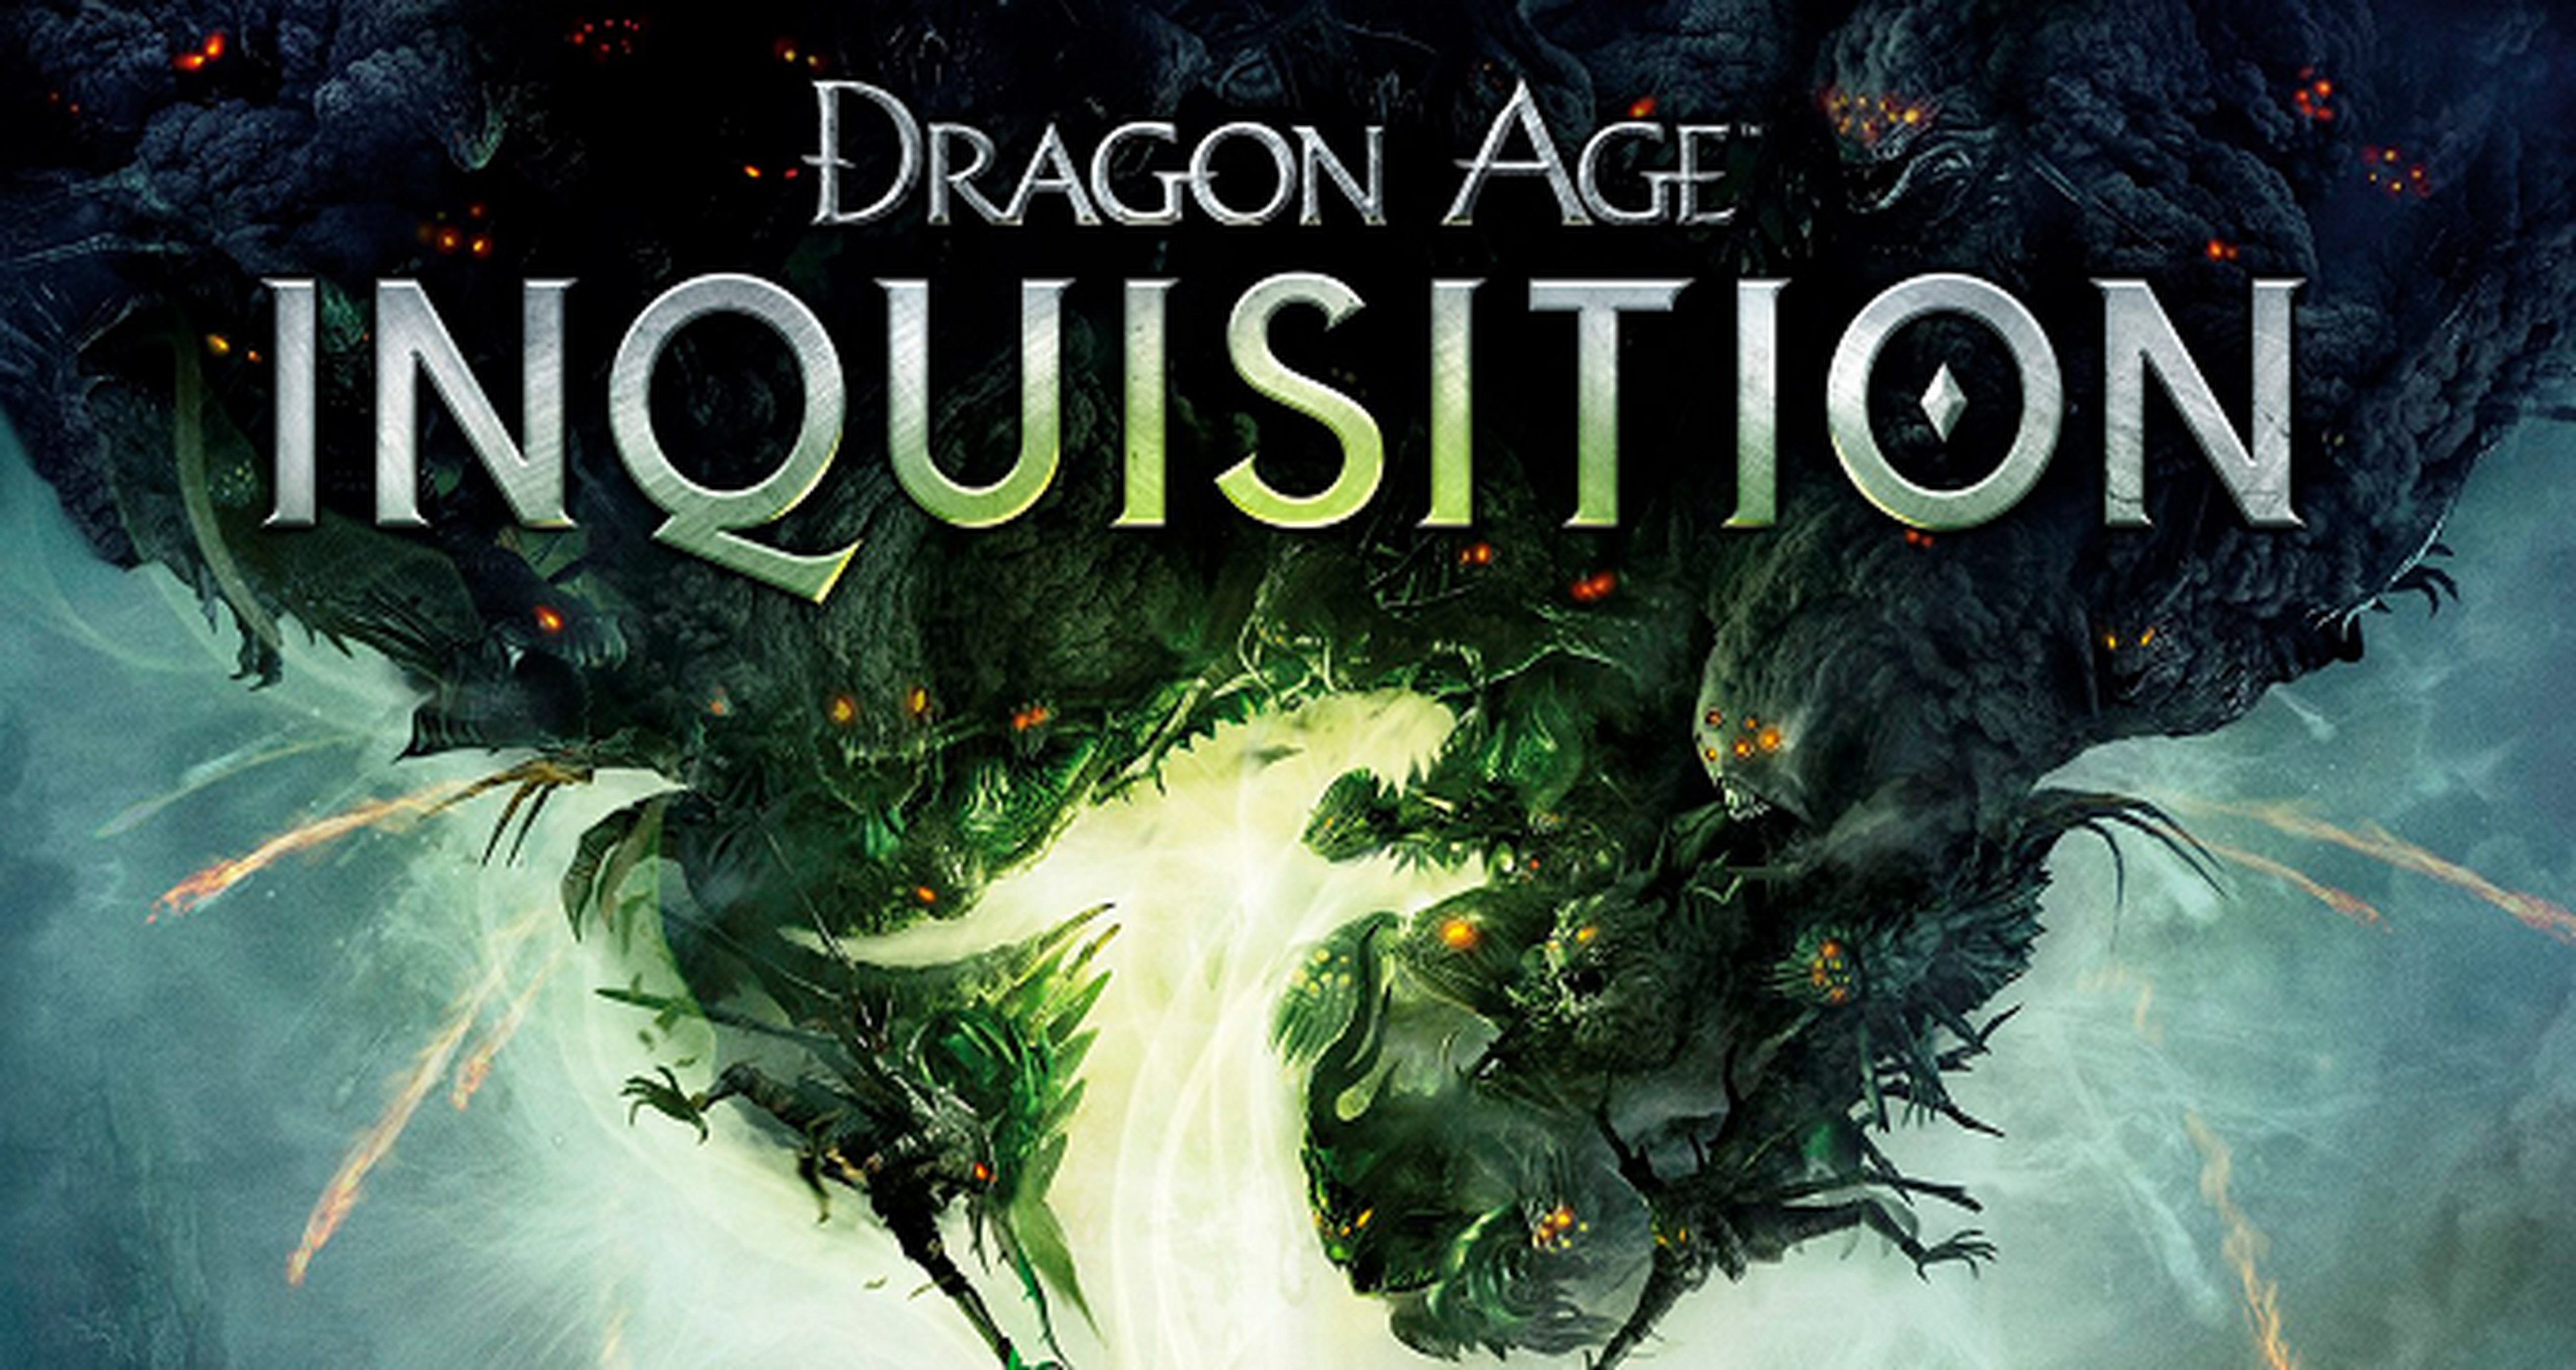 Posible portada de Dragon Age Inquisition